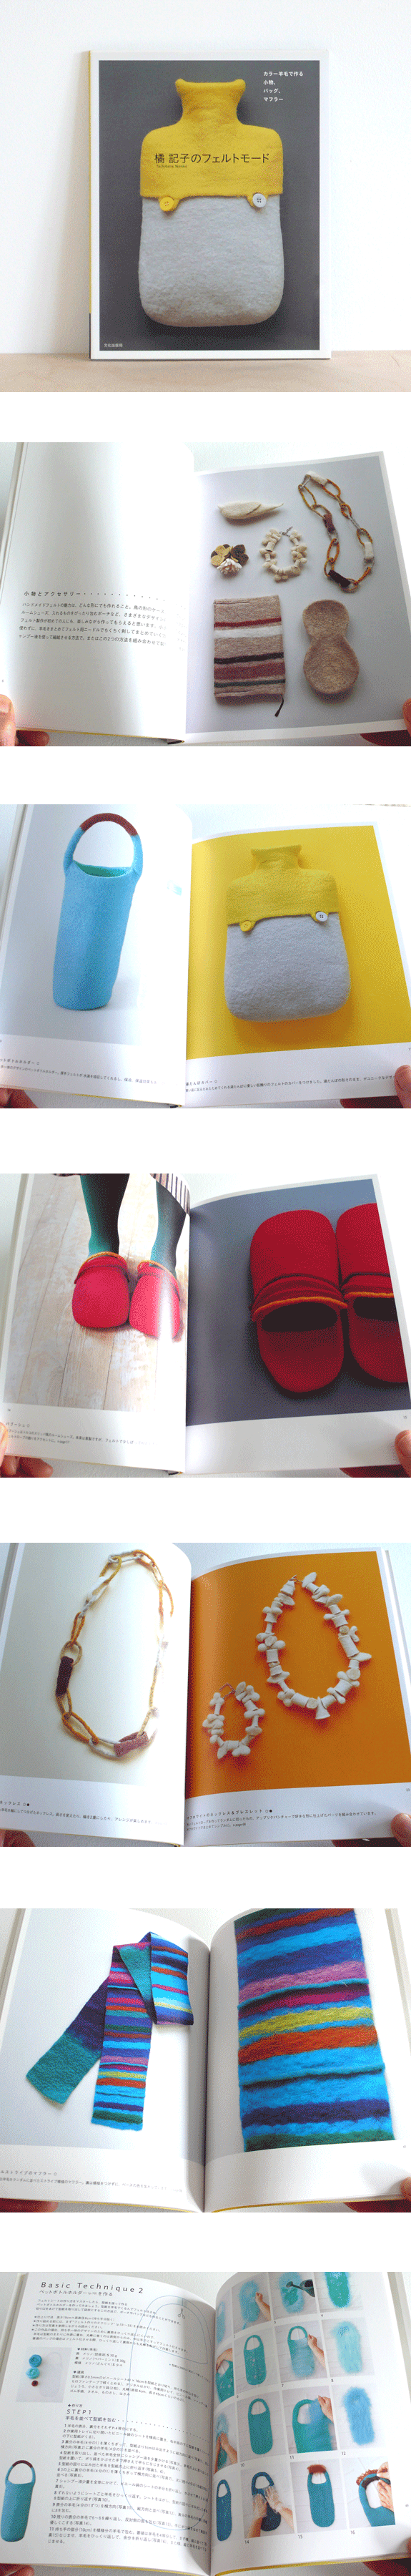 noriko tachibana felt mode book japanese [modern felt design, felt craft, unique felt projects]